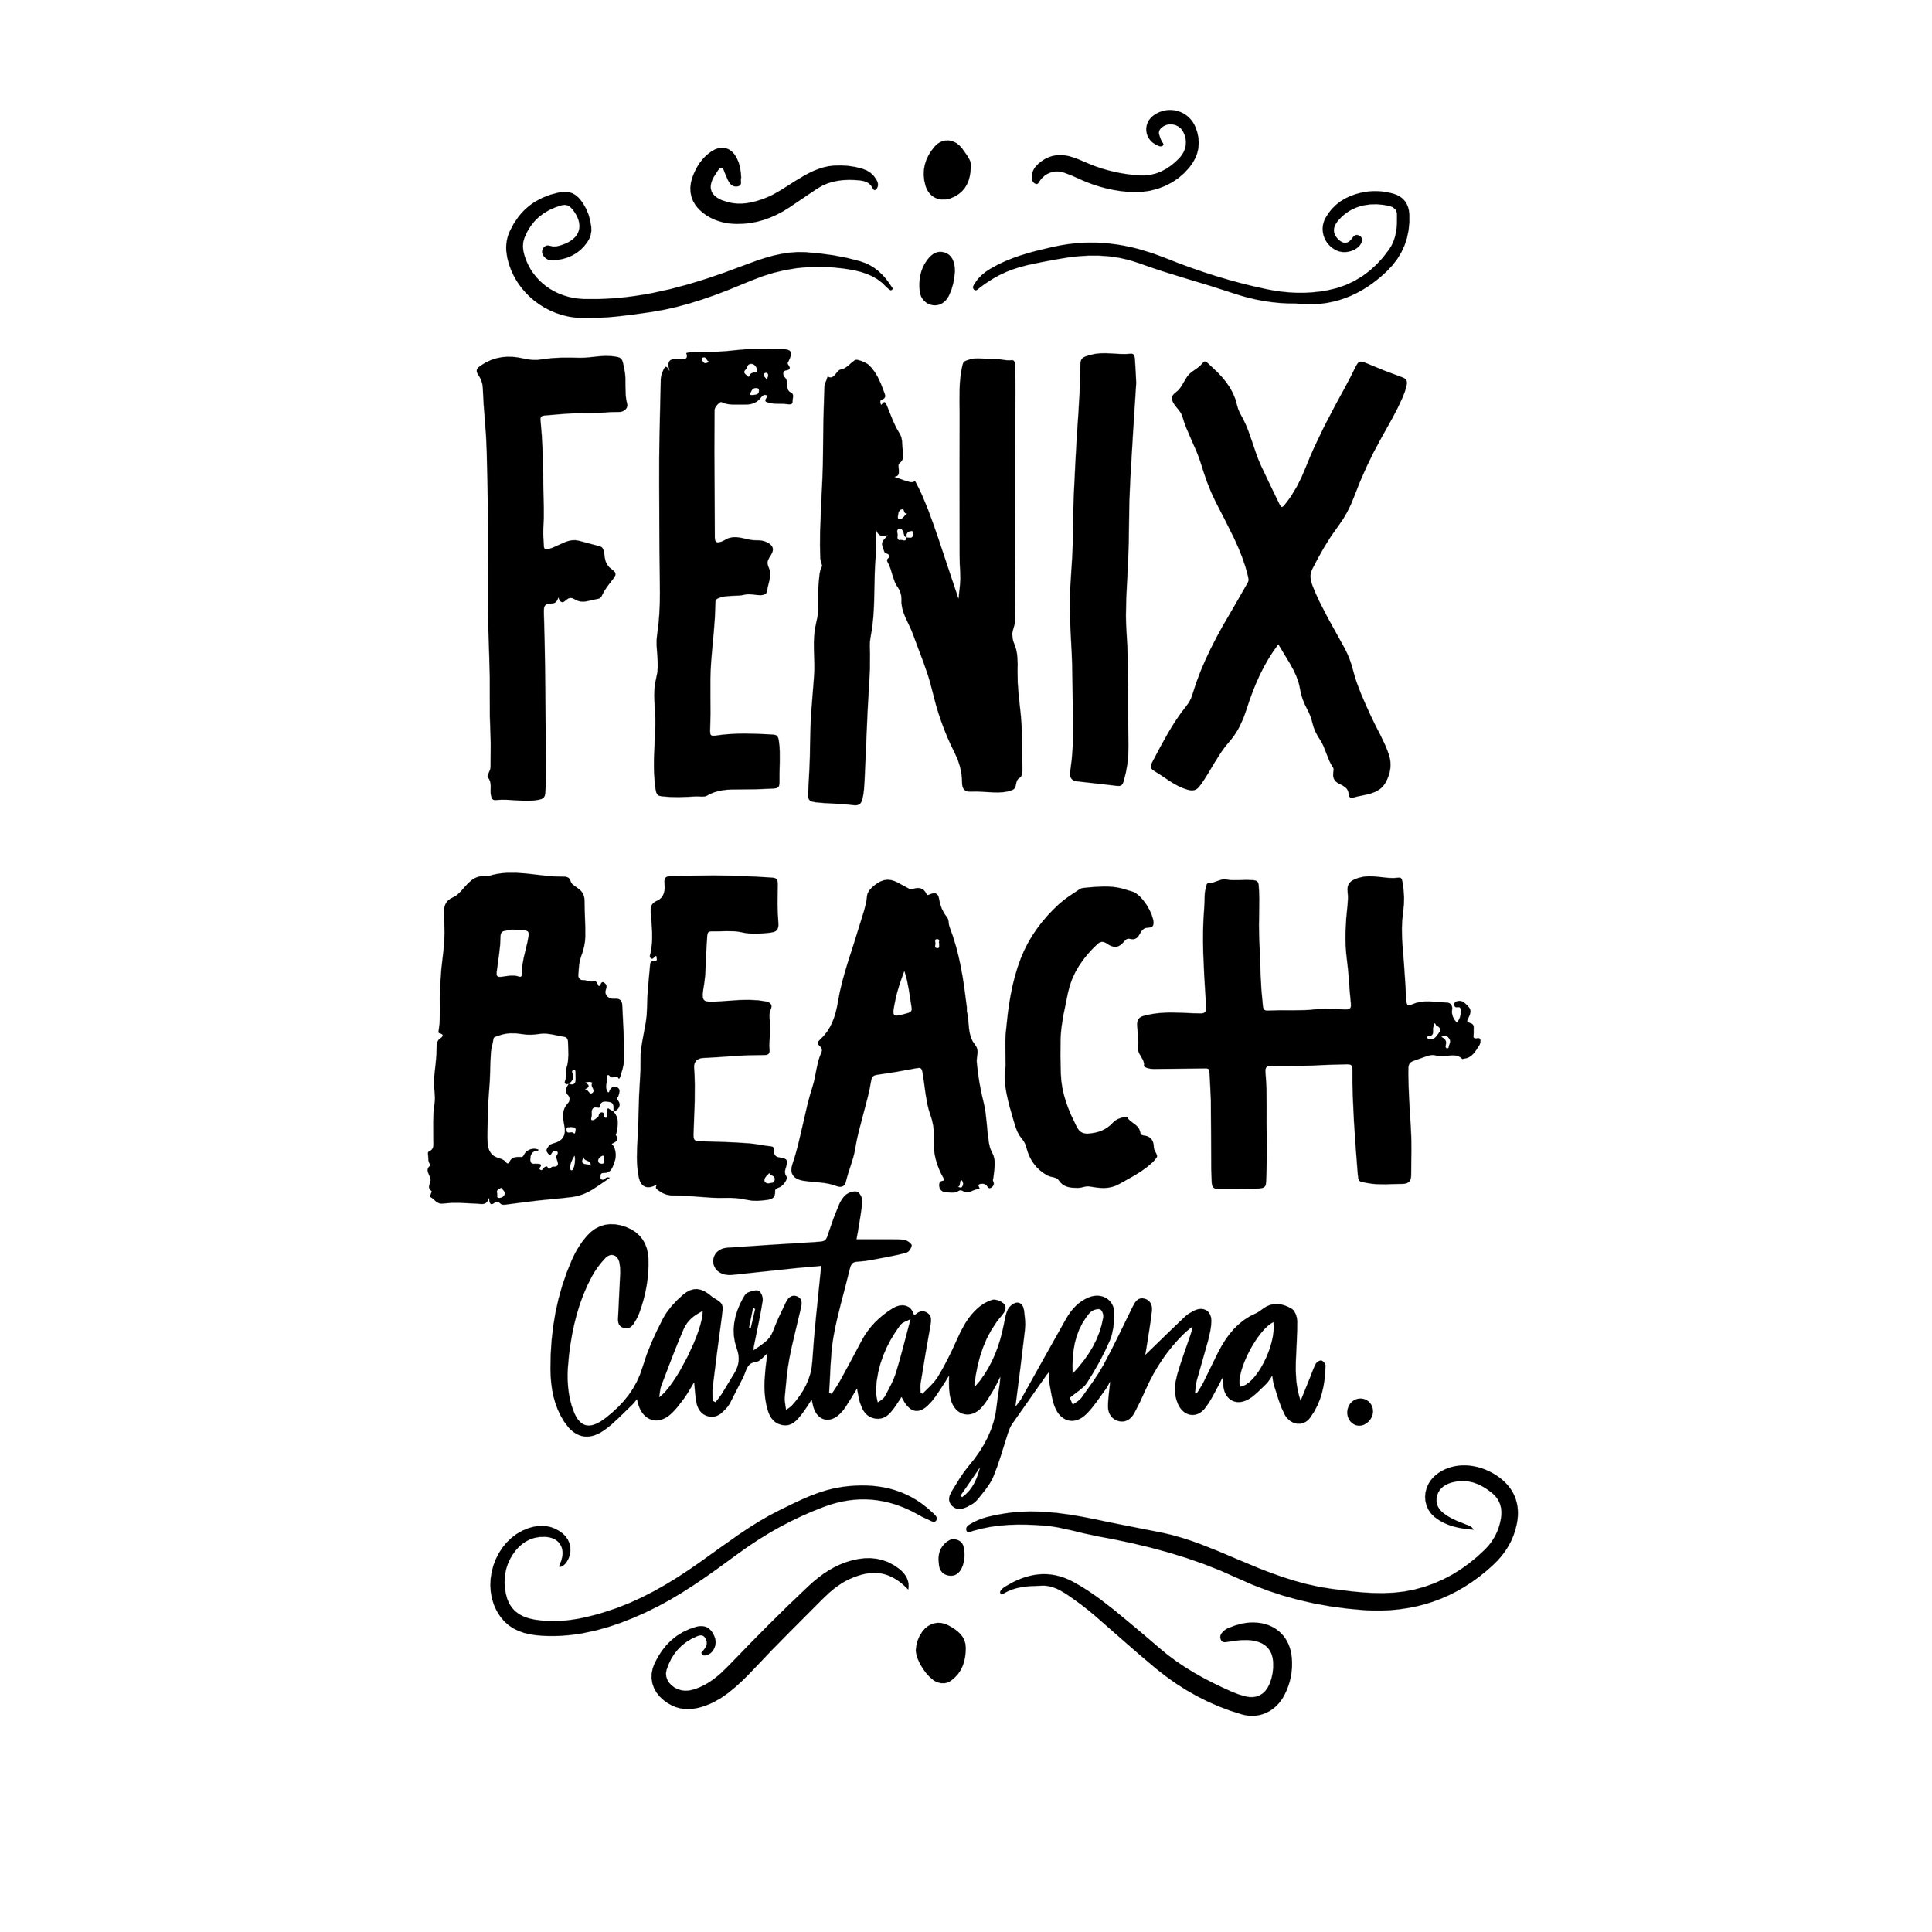 Fenix Beach Cartagena